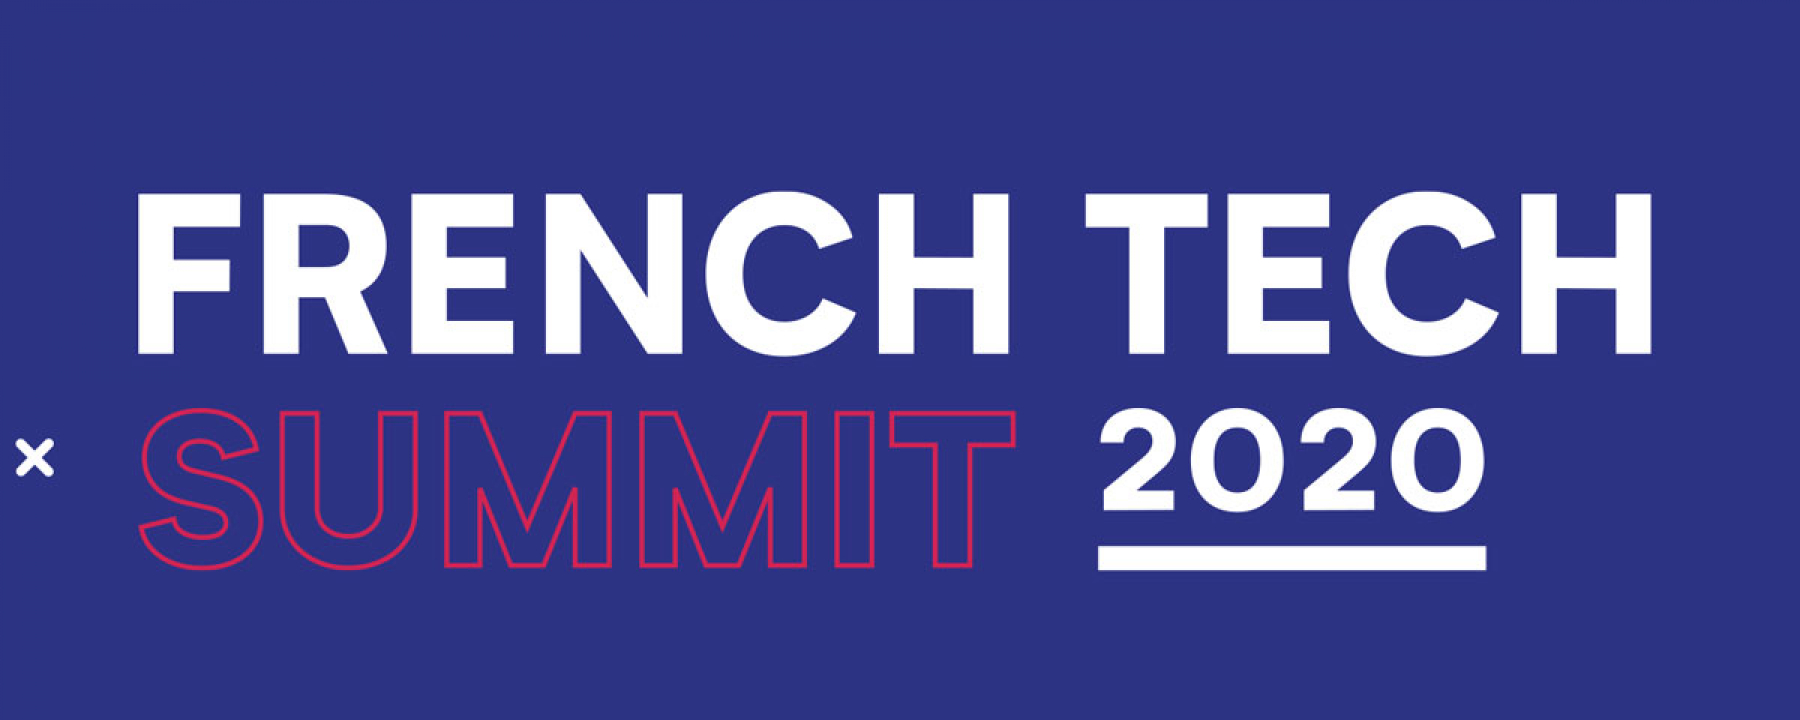 French tech Summit 2020